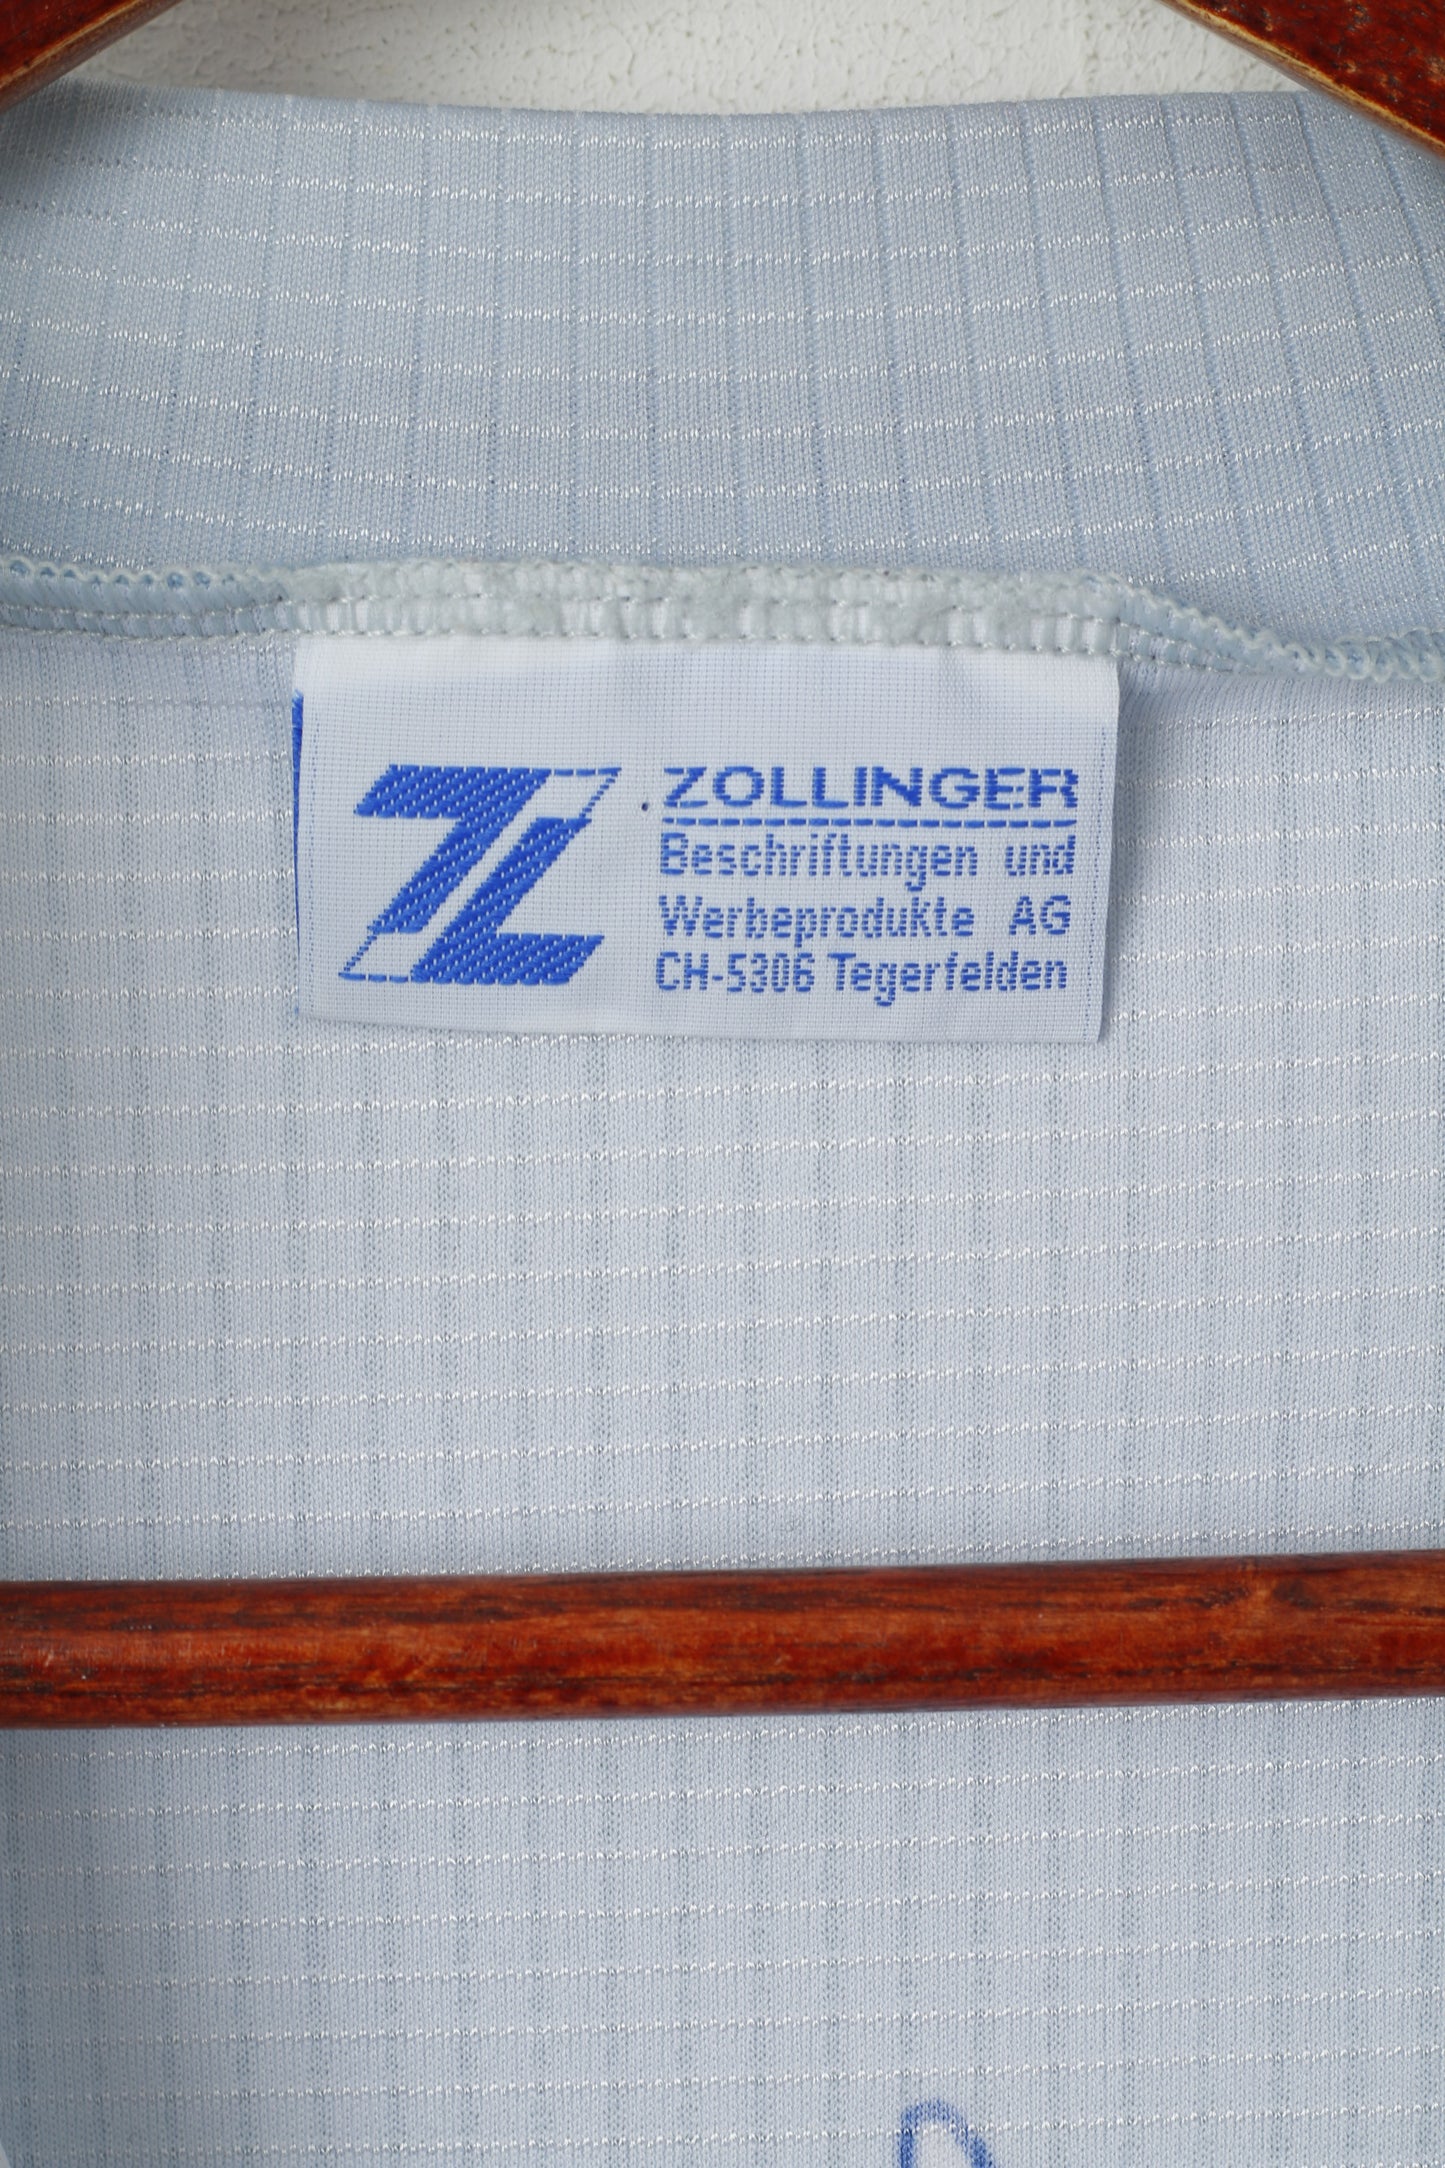 Zollinger Men XL Cycling Shirt Grey Costa Blanca Bike Zip Up Made in Italy Jersey Top